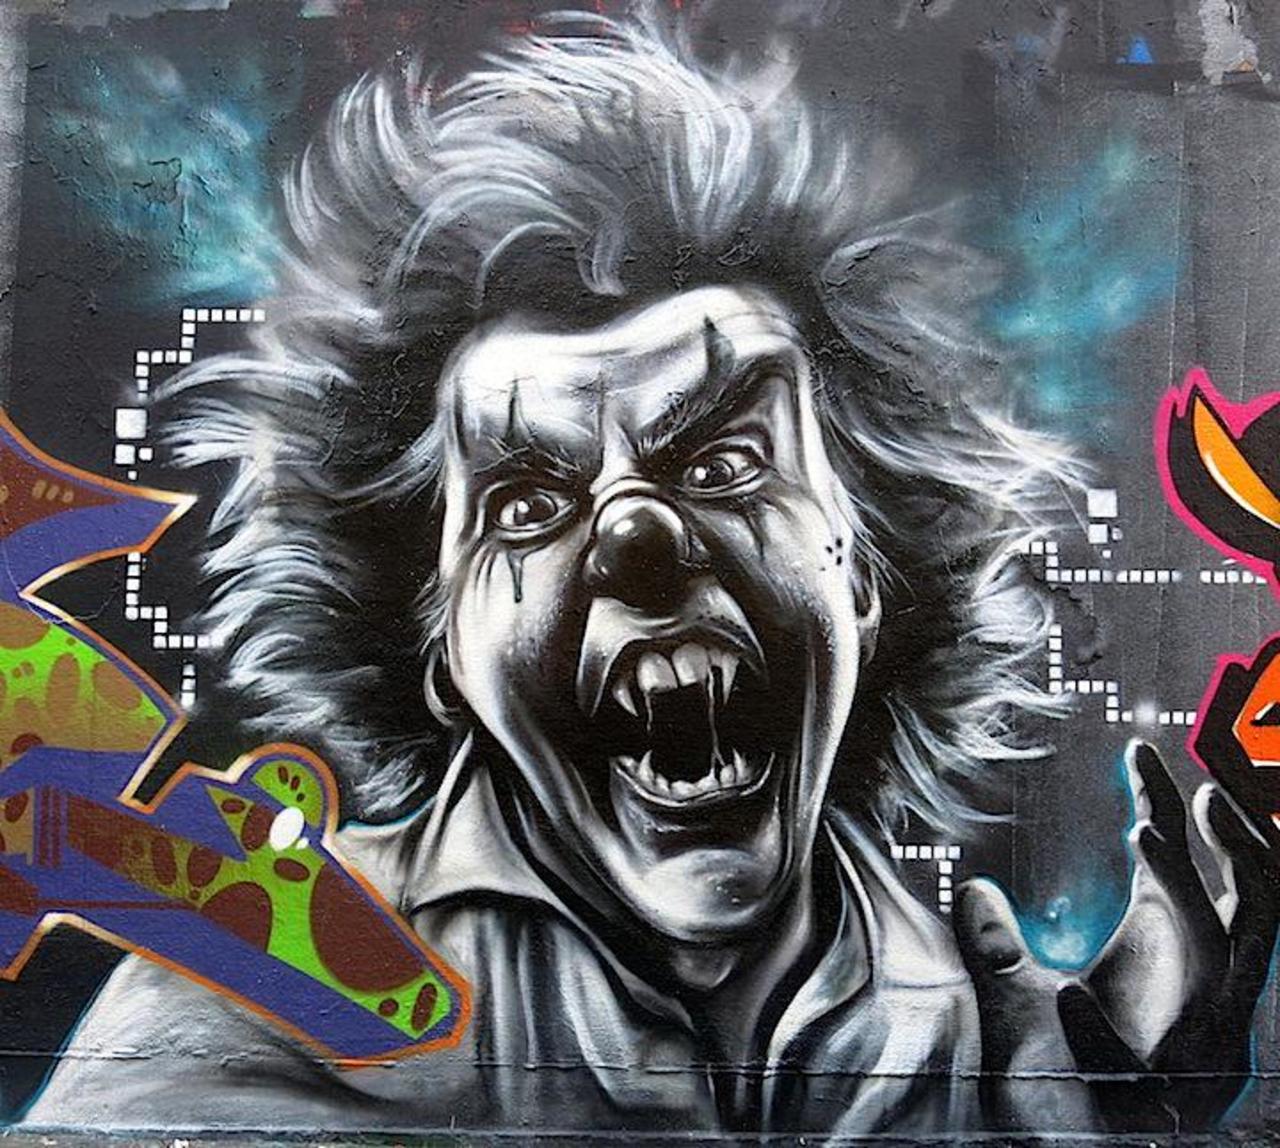 StreetArt News
Trans1 in #NewYork #USA 
#StreetArt #Art #UrbanArt #Graffiti http://t.co/oxhykEvgsC